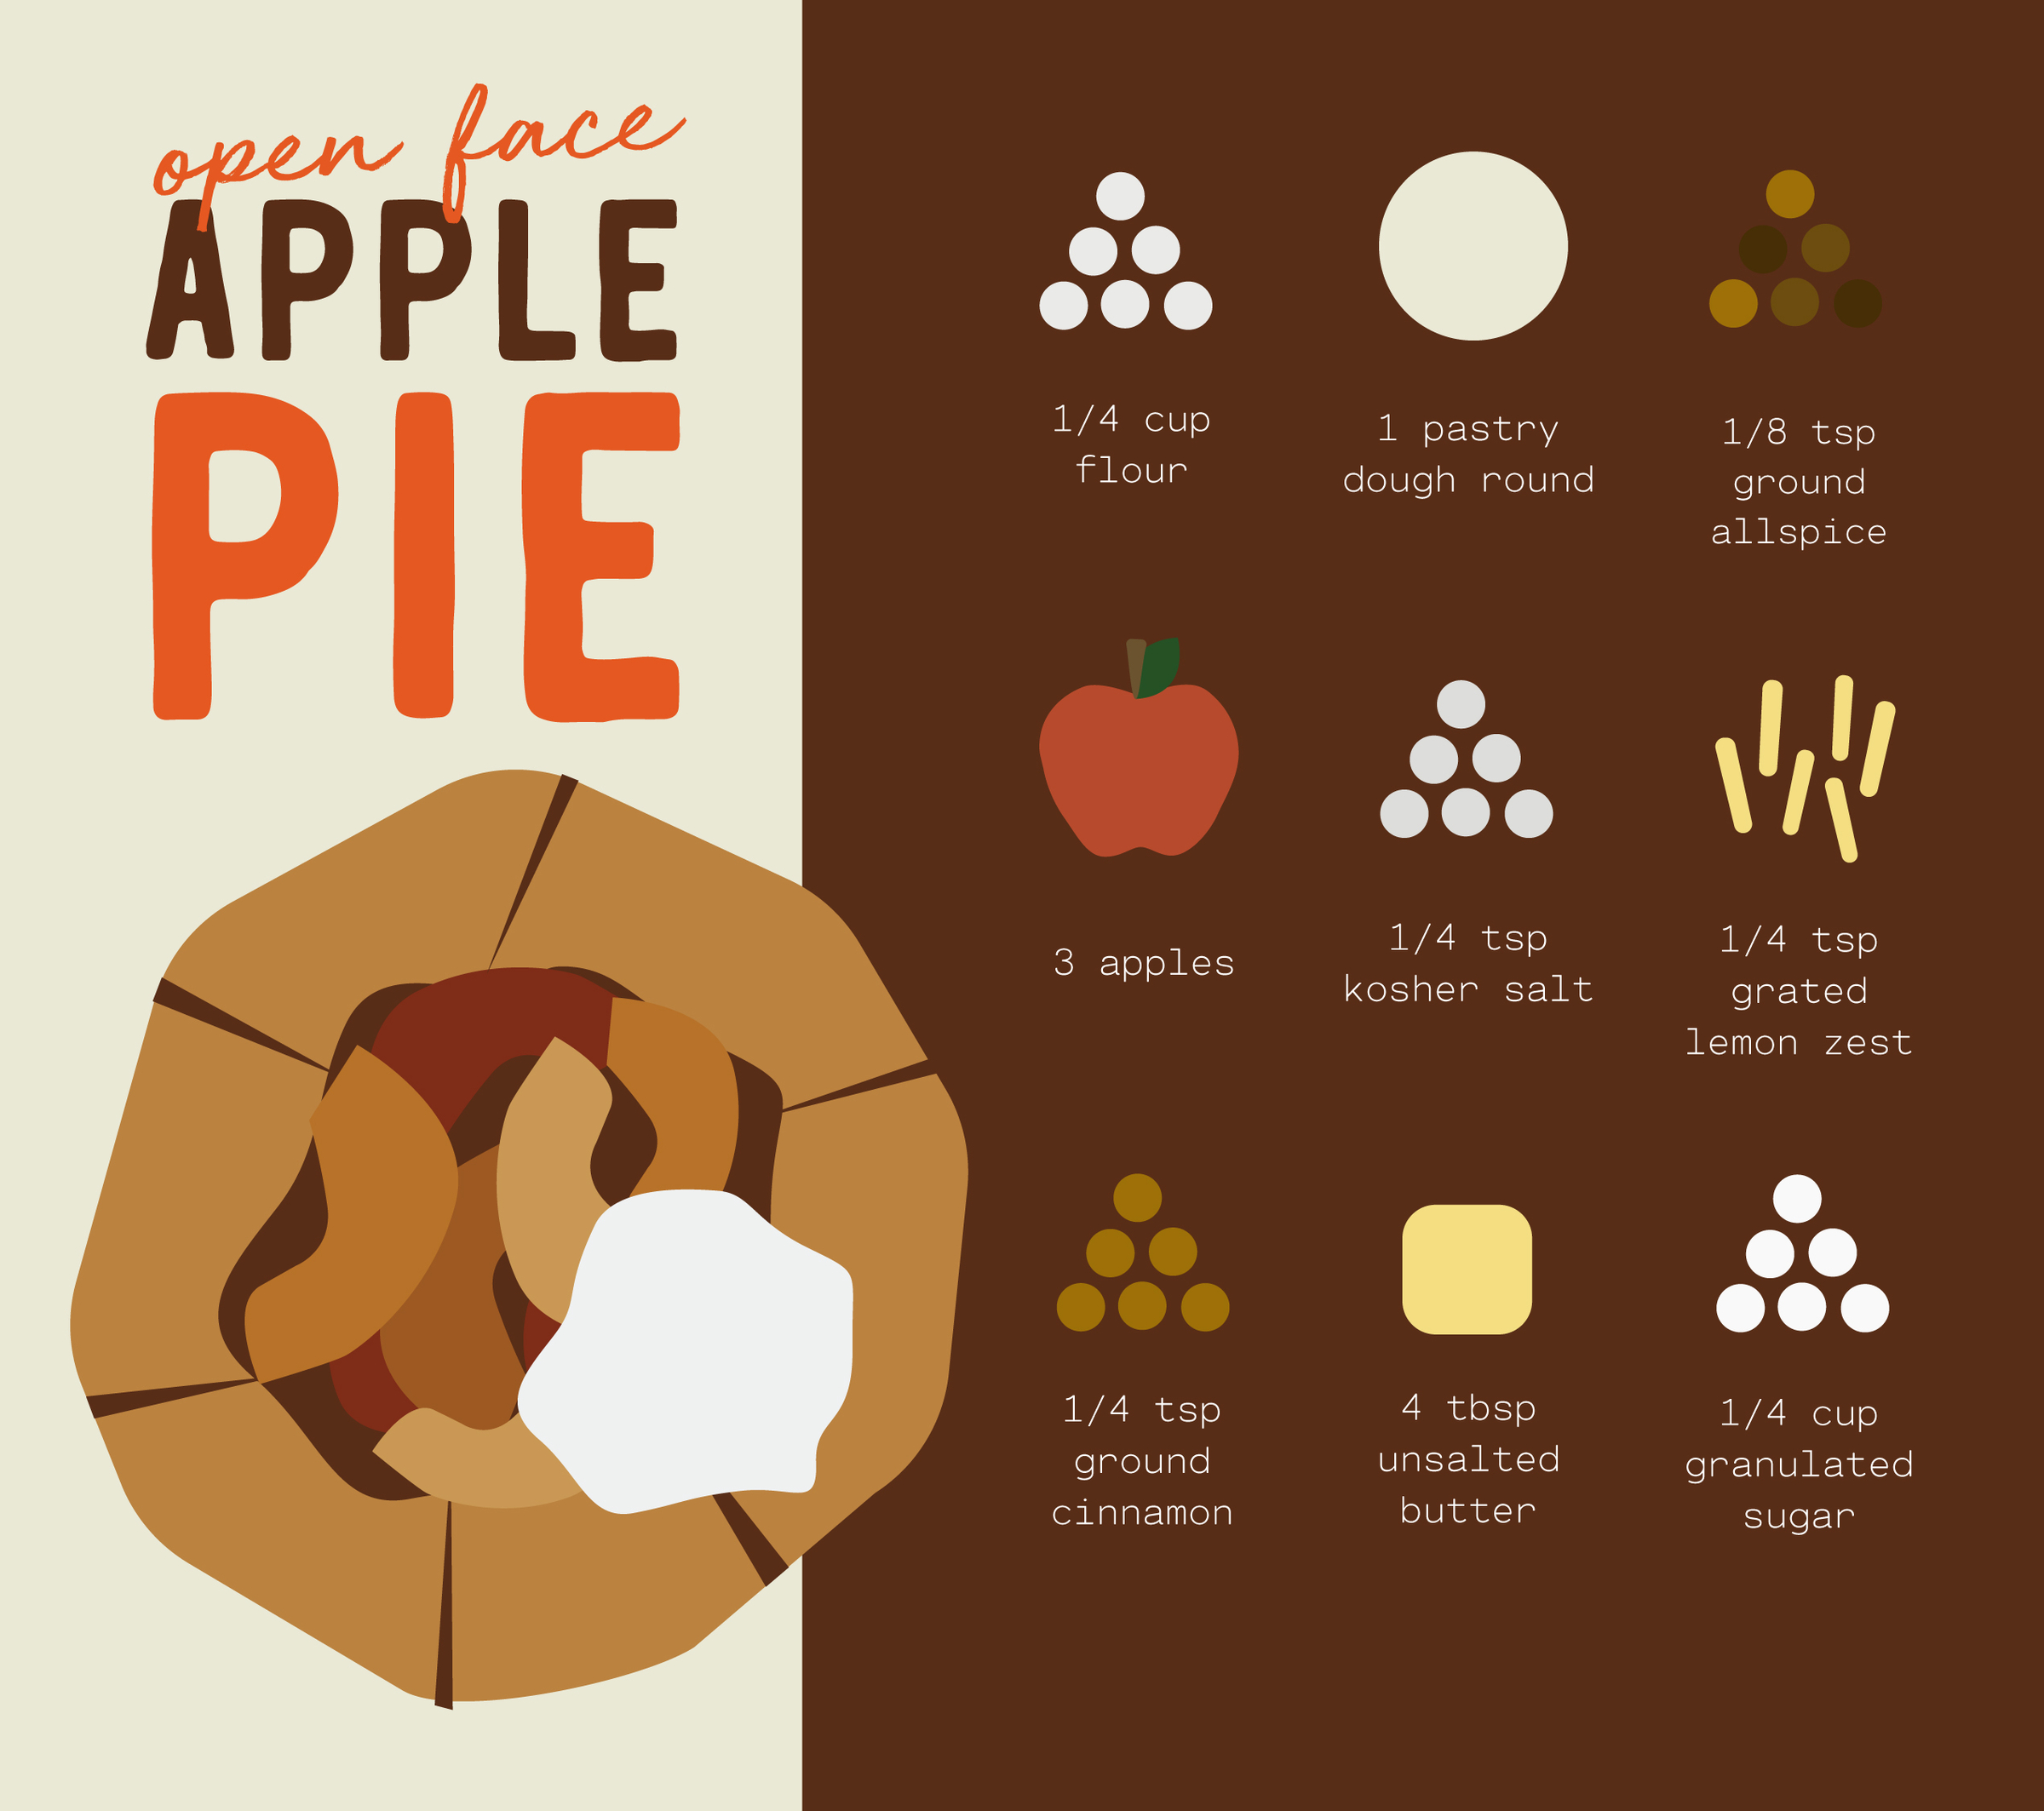 Recipe Card for Apple-Huckleberry Open Face Pie